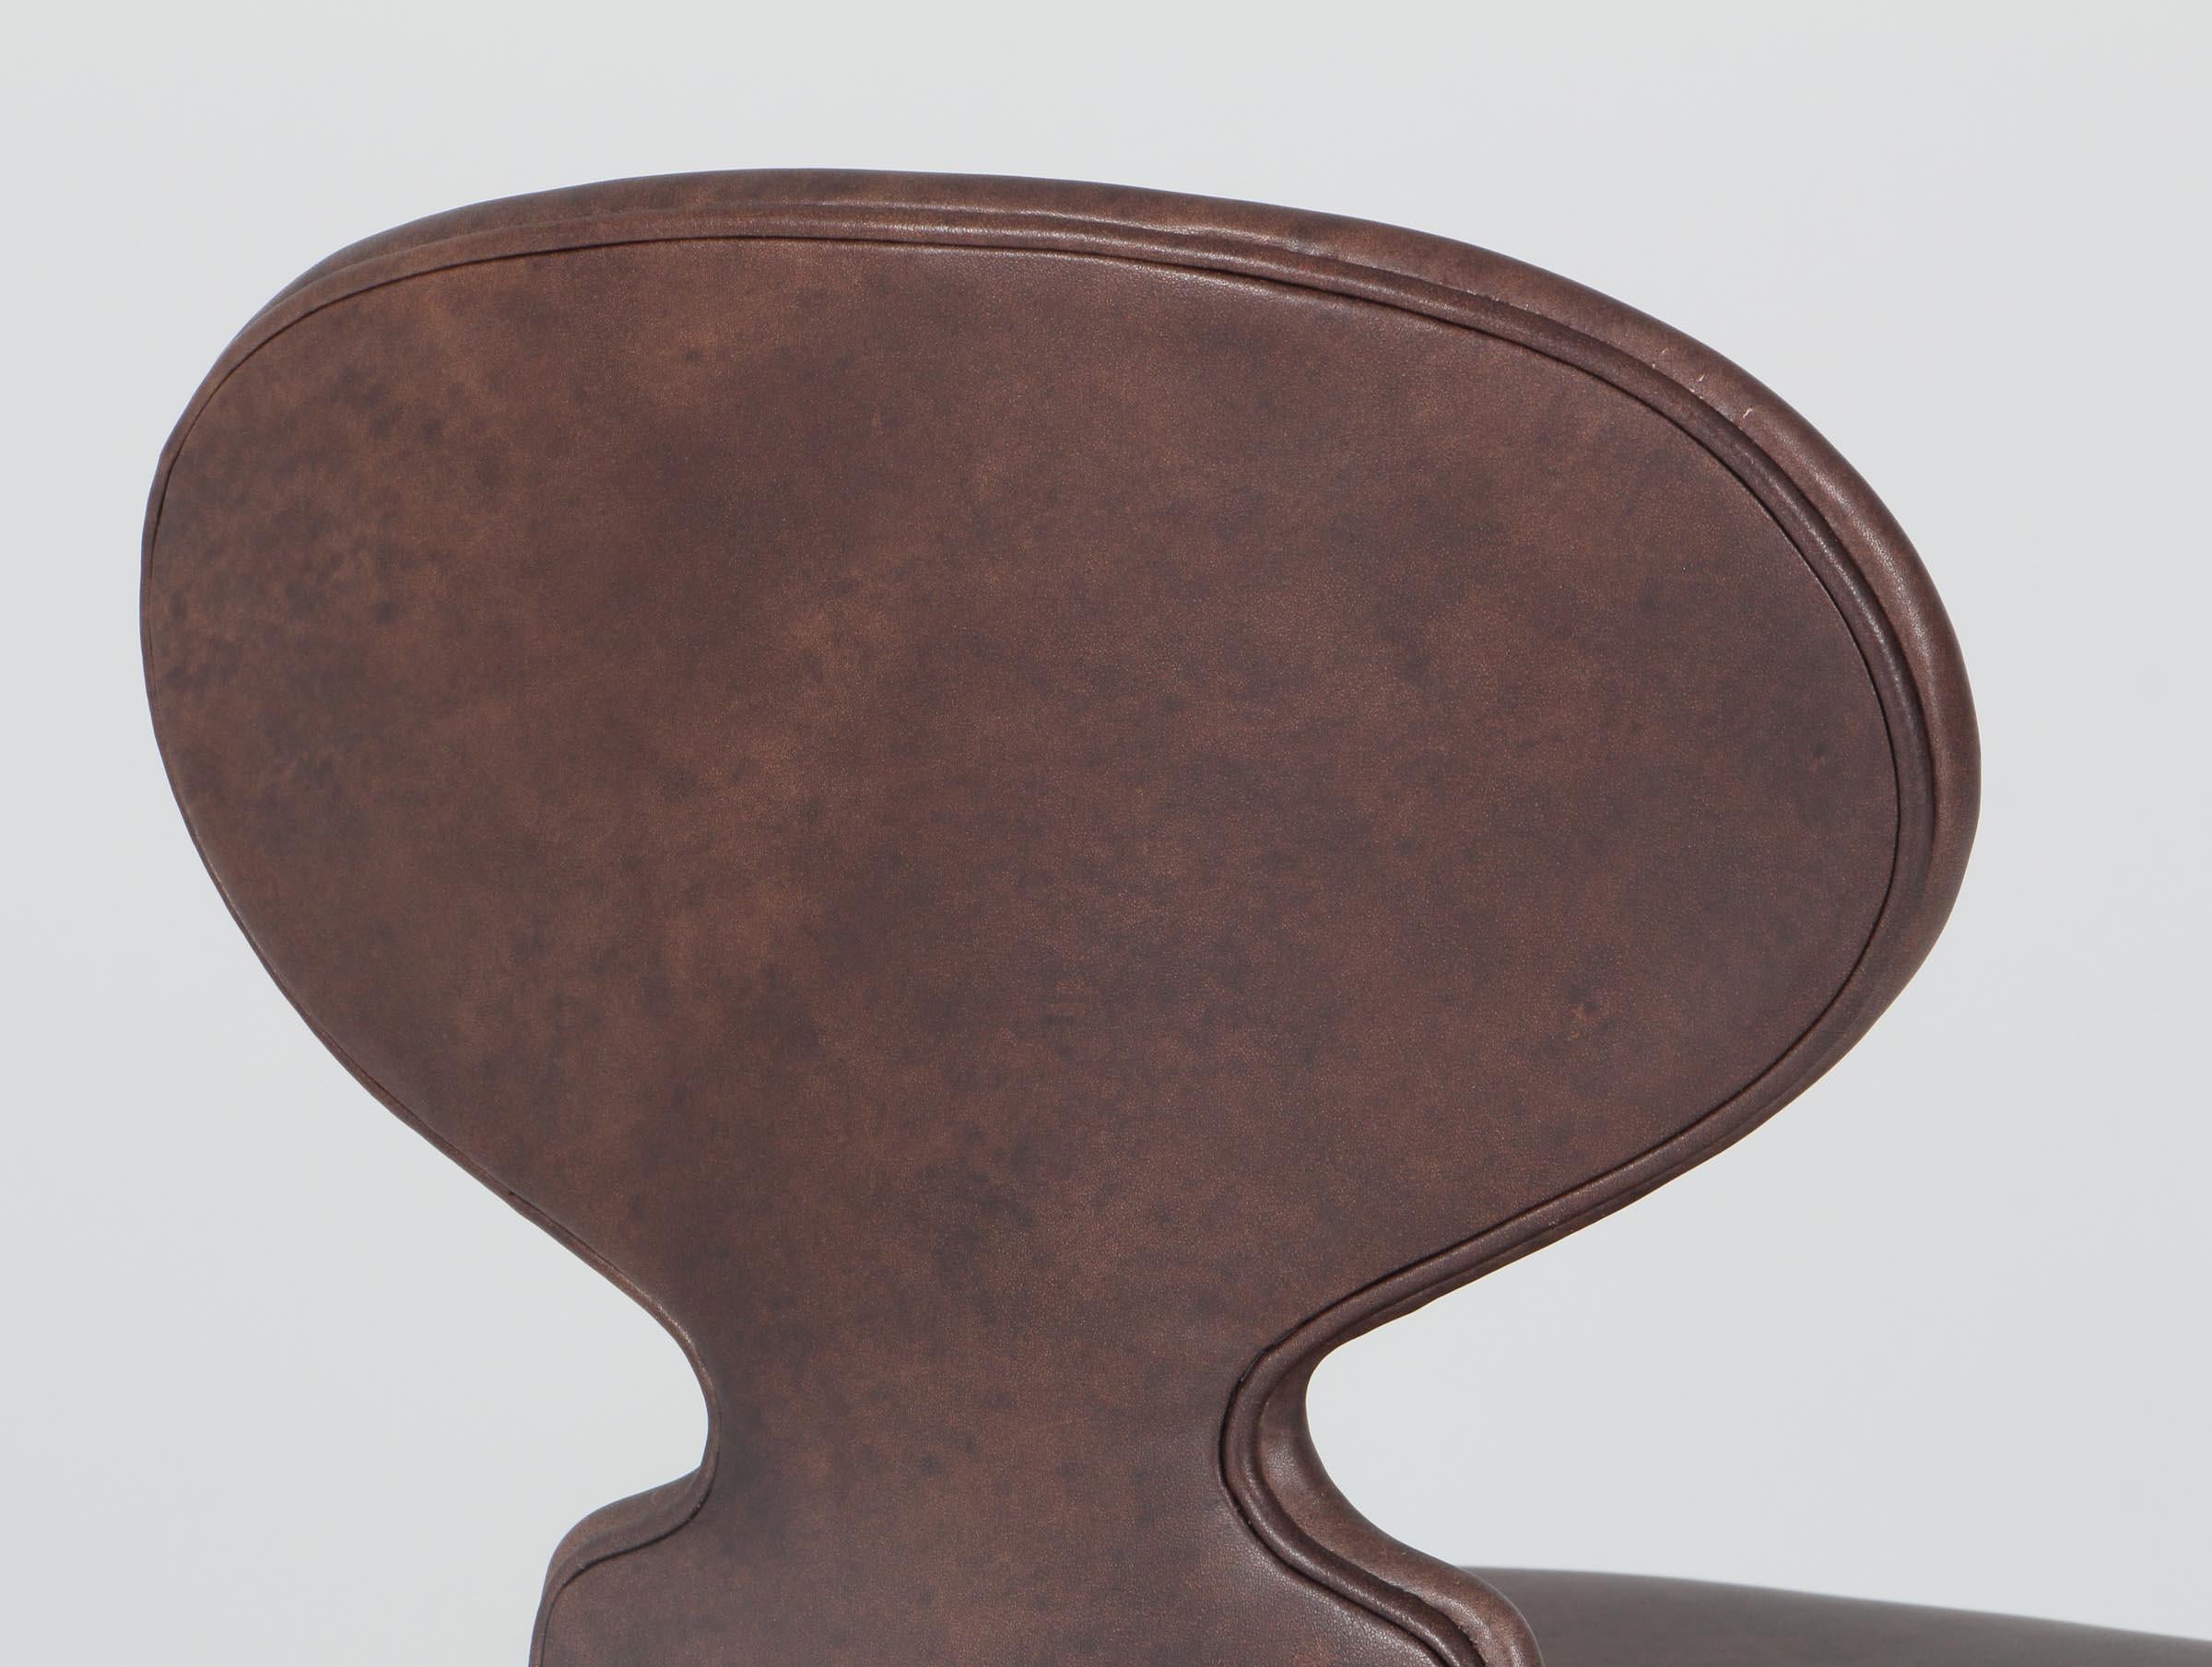 Steel Arne Jacobsen, Dining Chair Model 3101 